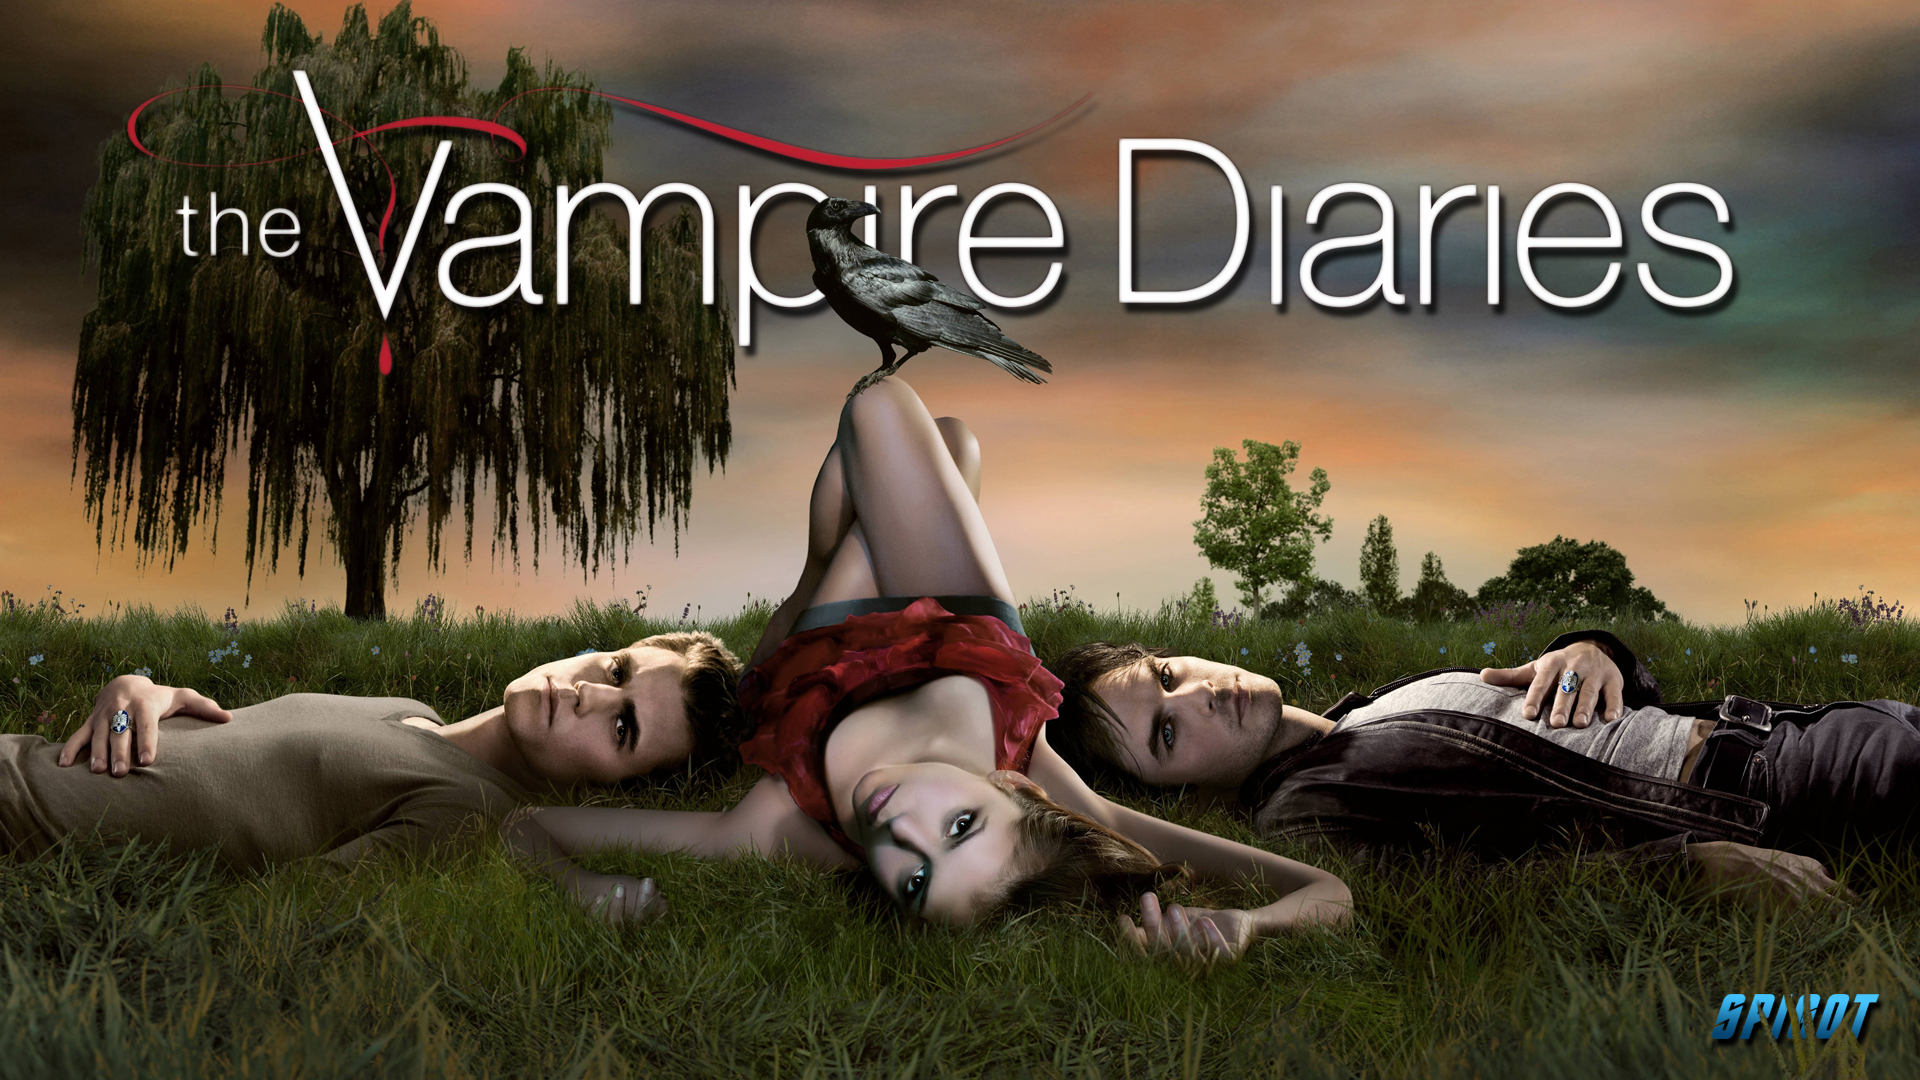 The Vampire Diaries | George Spigot's Blog